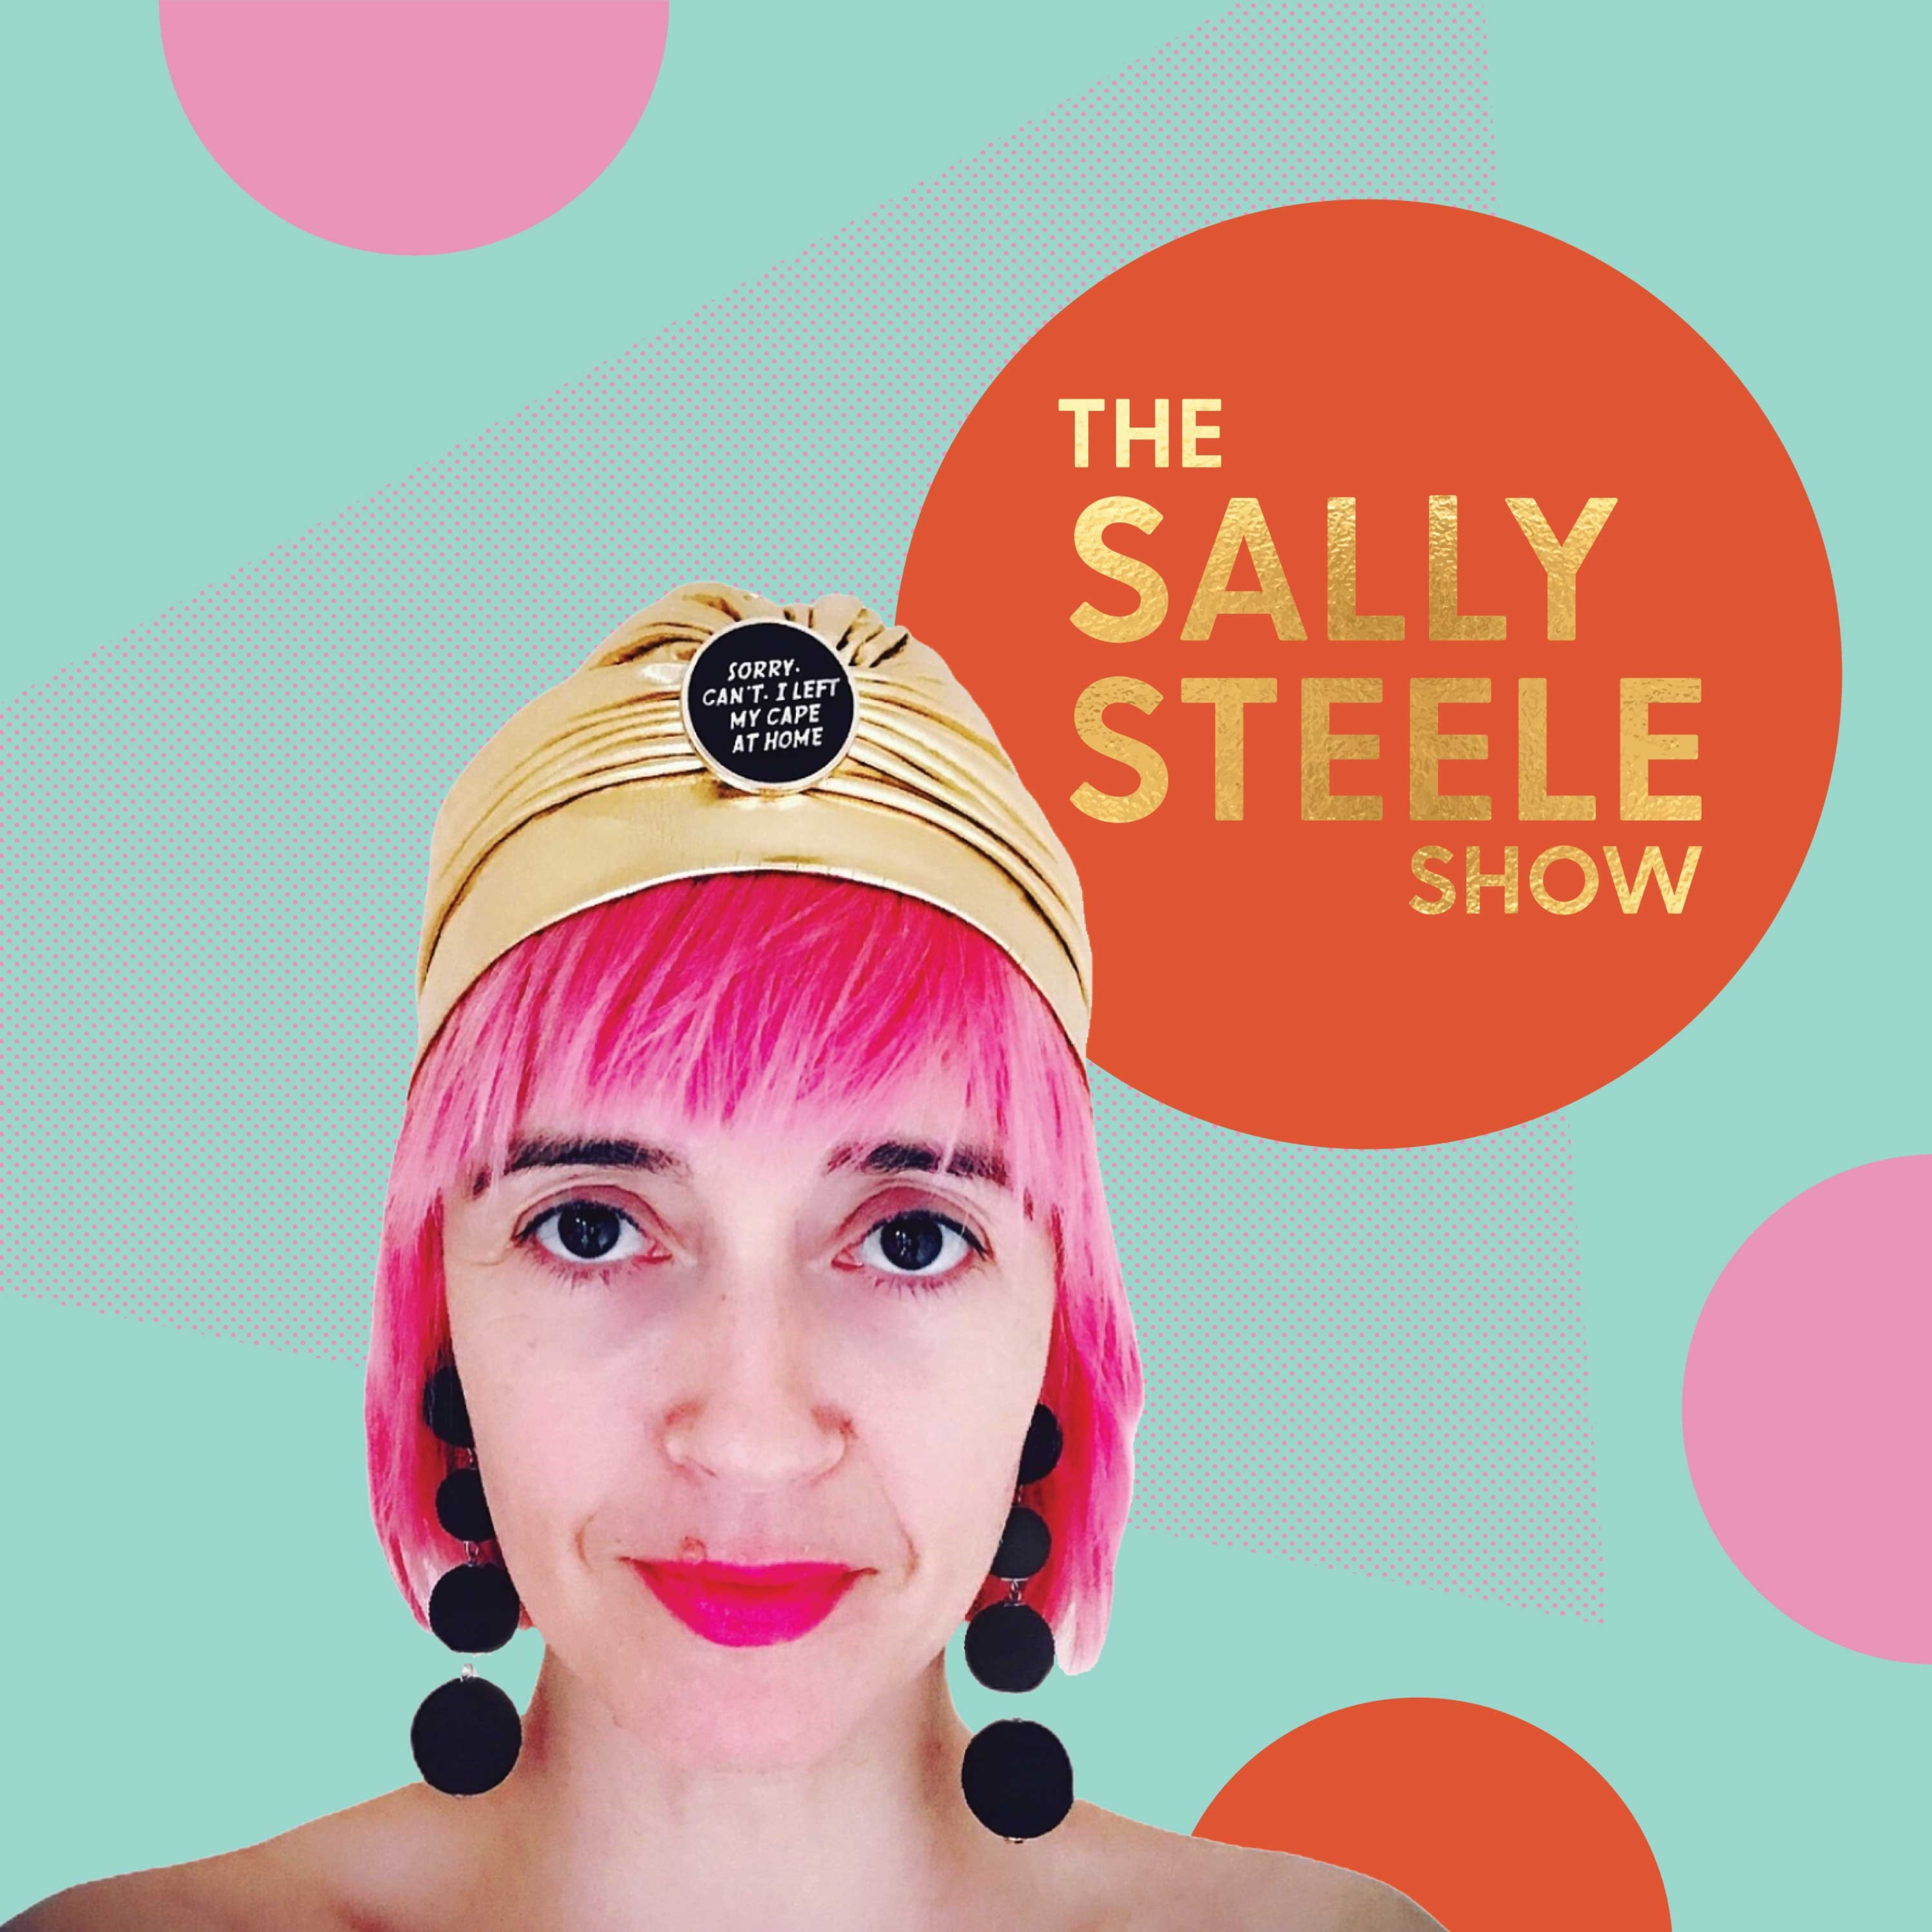 The Sally Steele Show